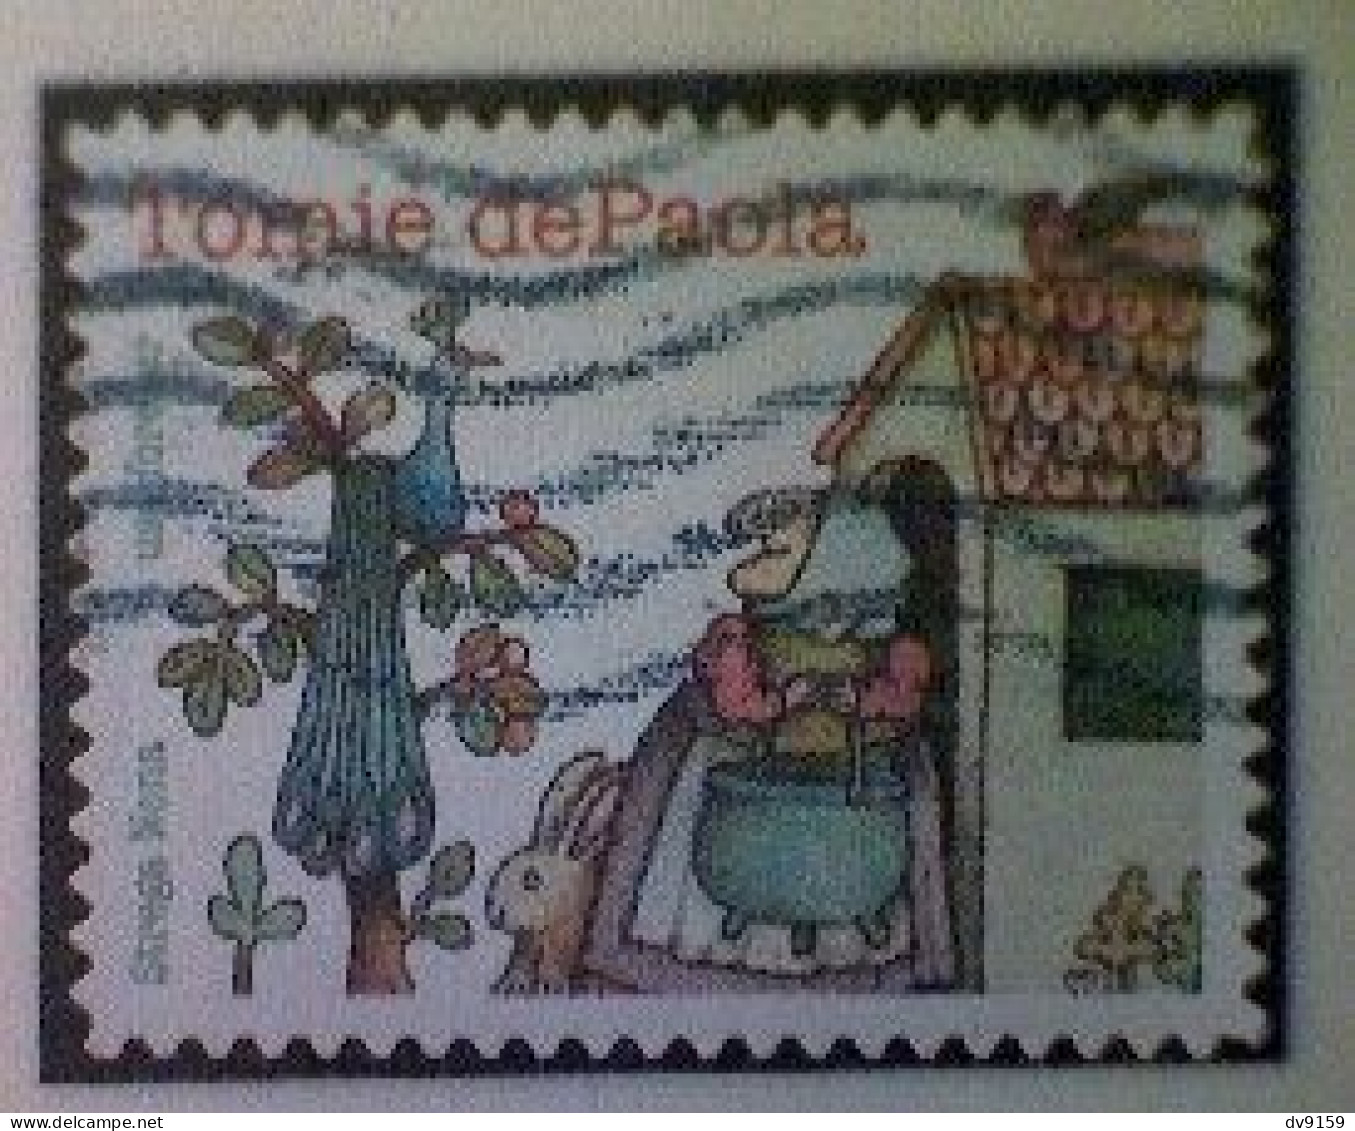 United States, Scott #5797, Used(o), 2023, Tomie De Paola, 'Strega Nona', Forever (63¢), Multicolored - Oblitérés